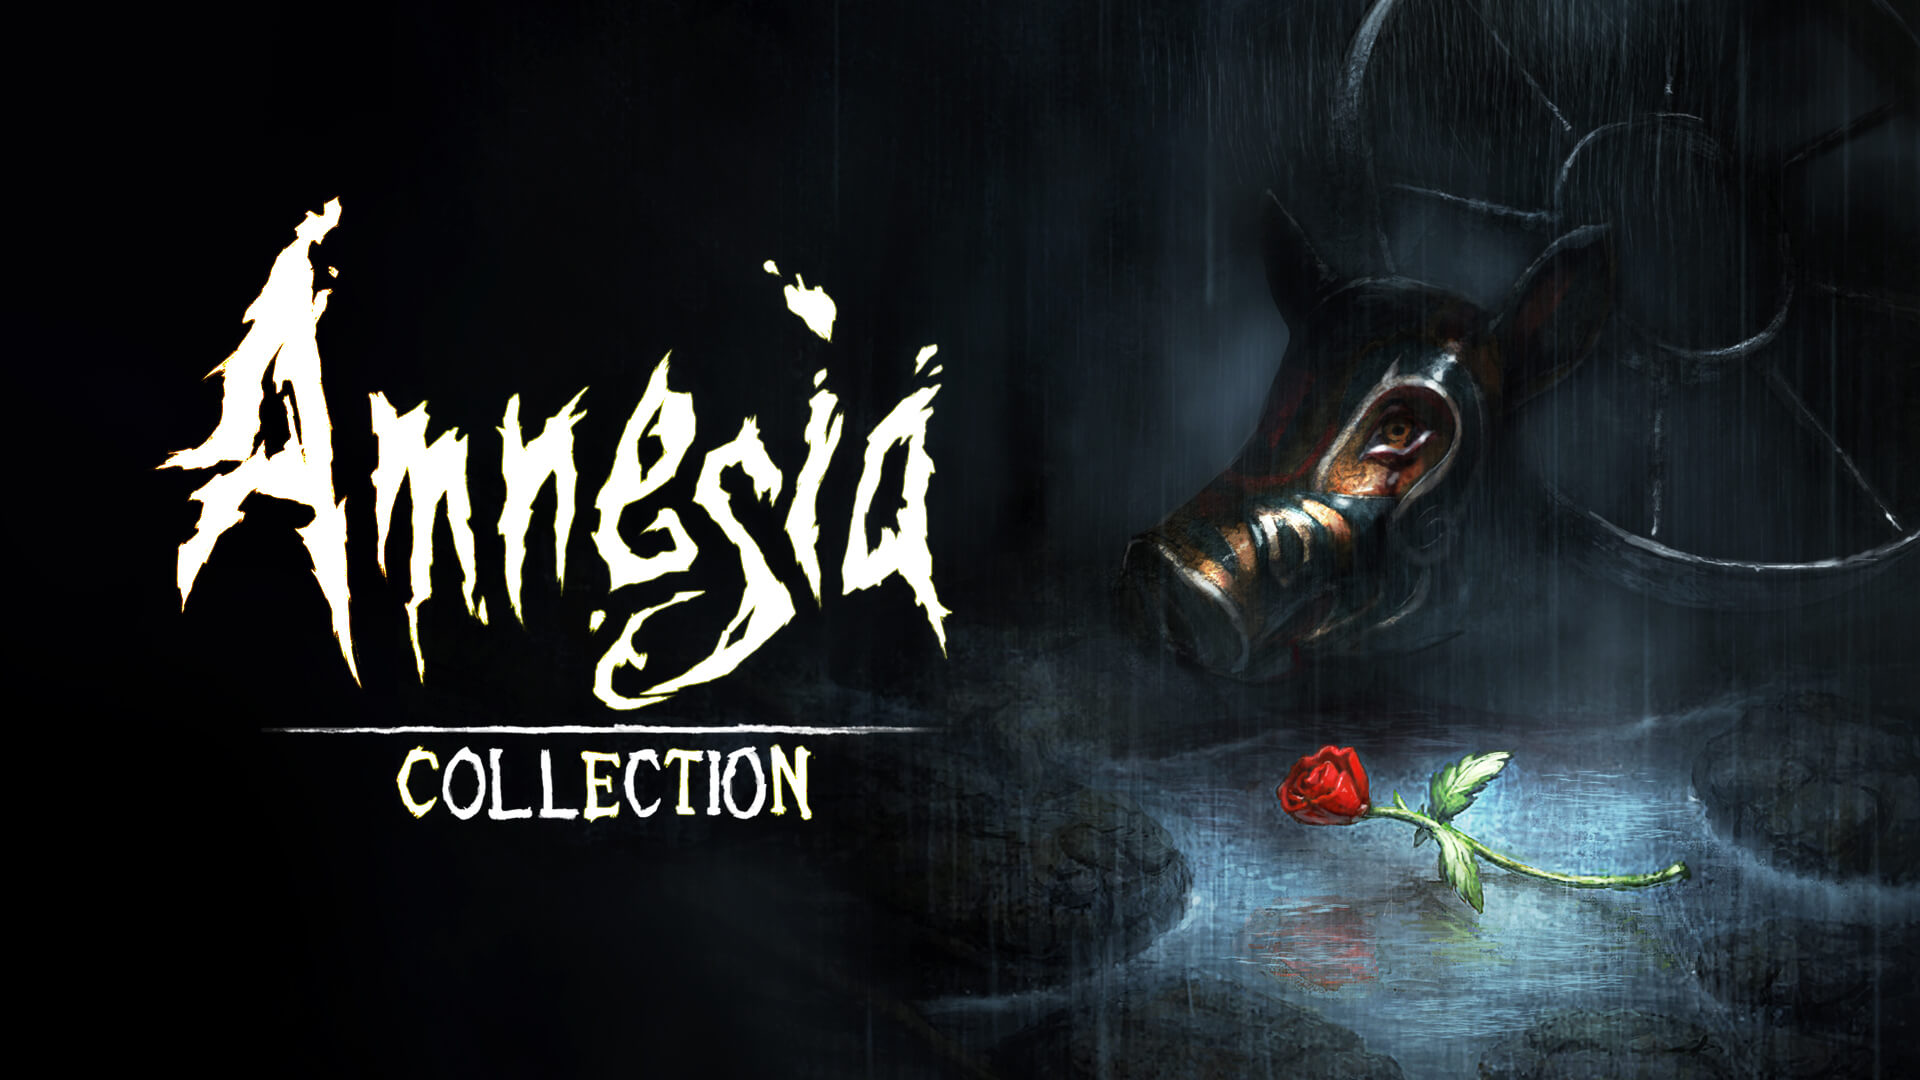 Amnesia: Collection